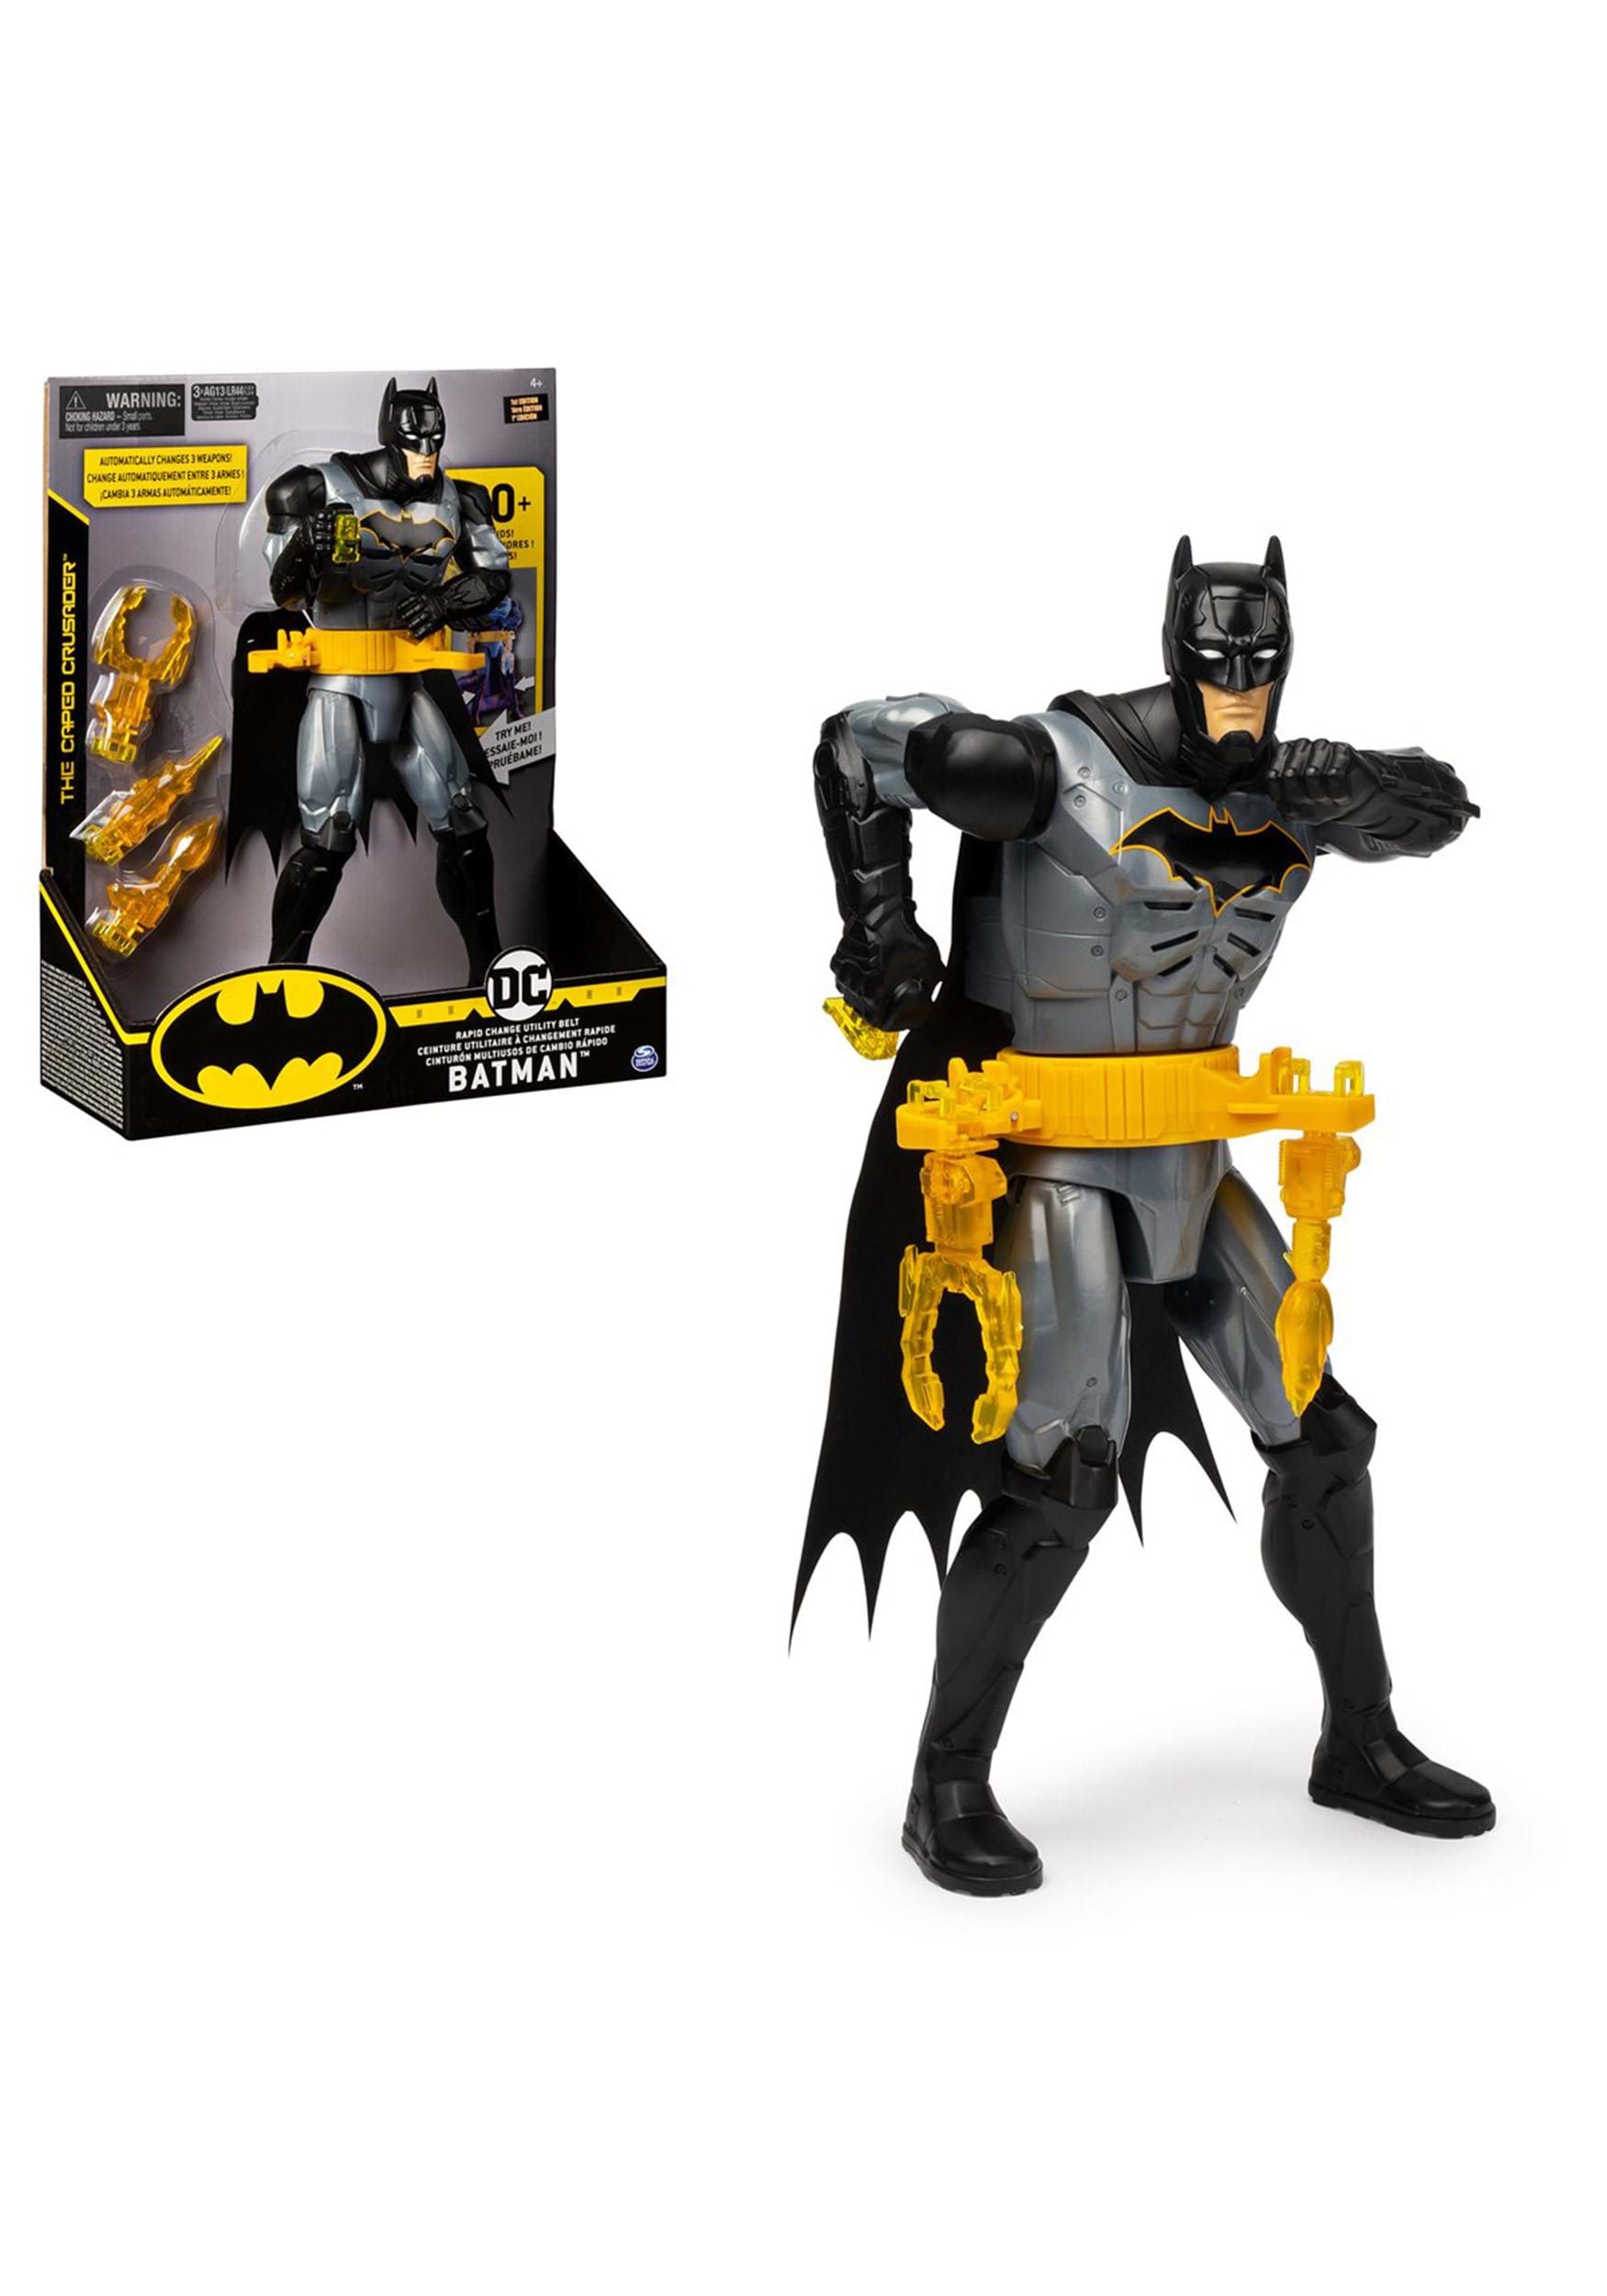 Batman 12-Inch Deluxe Action Figure with Rapid Change Utility Belt